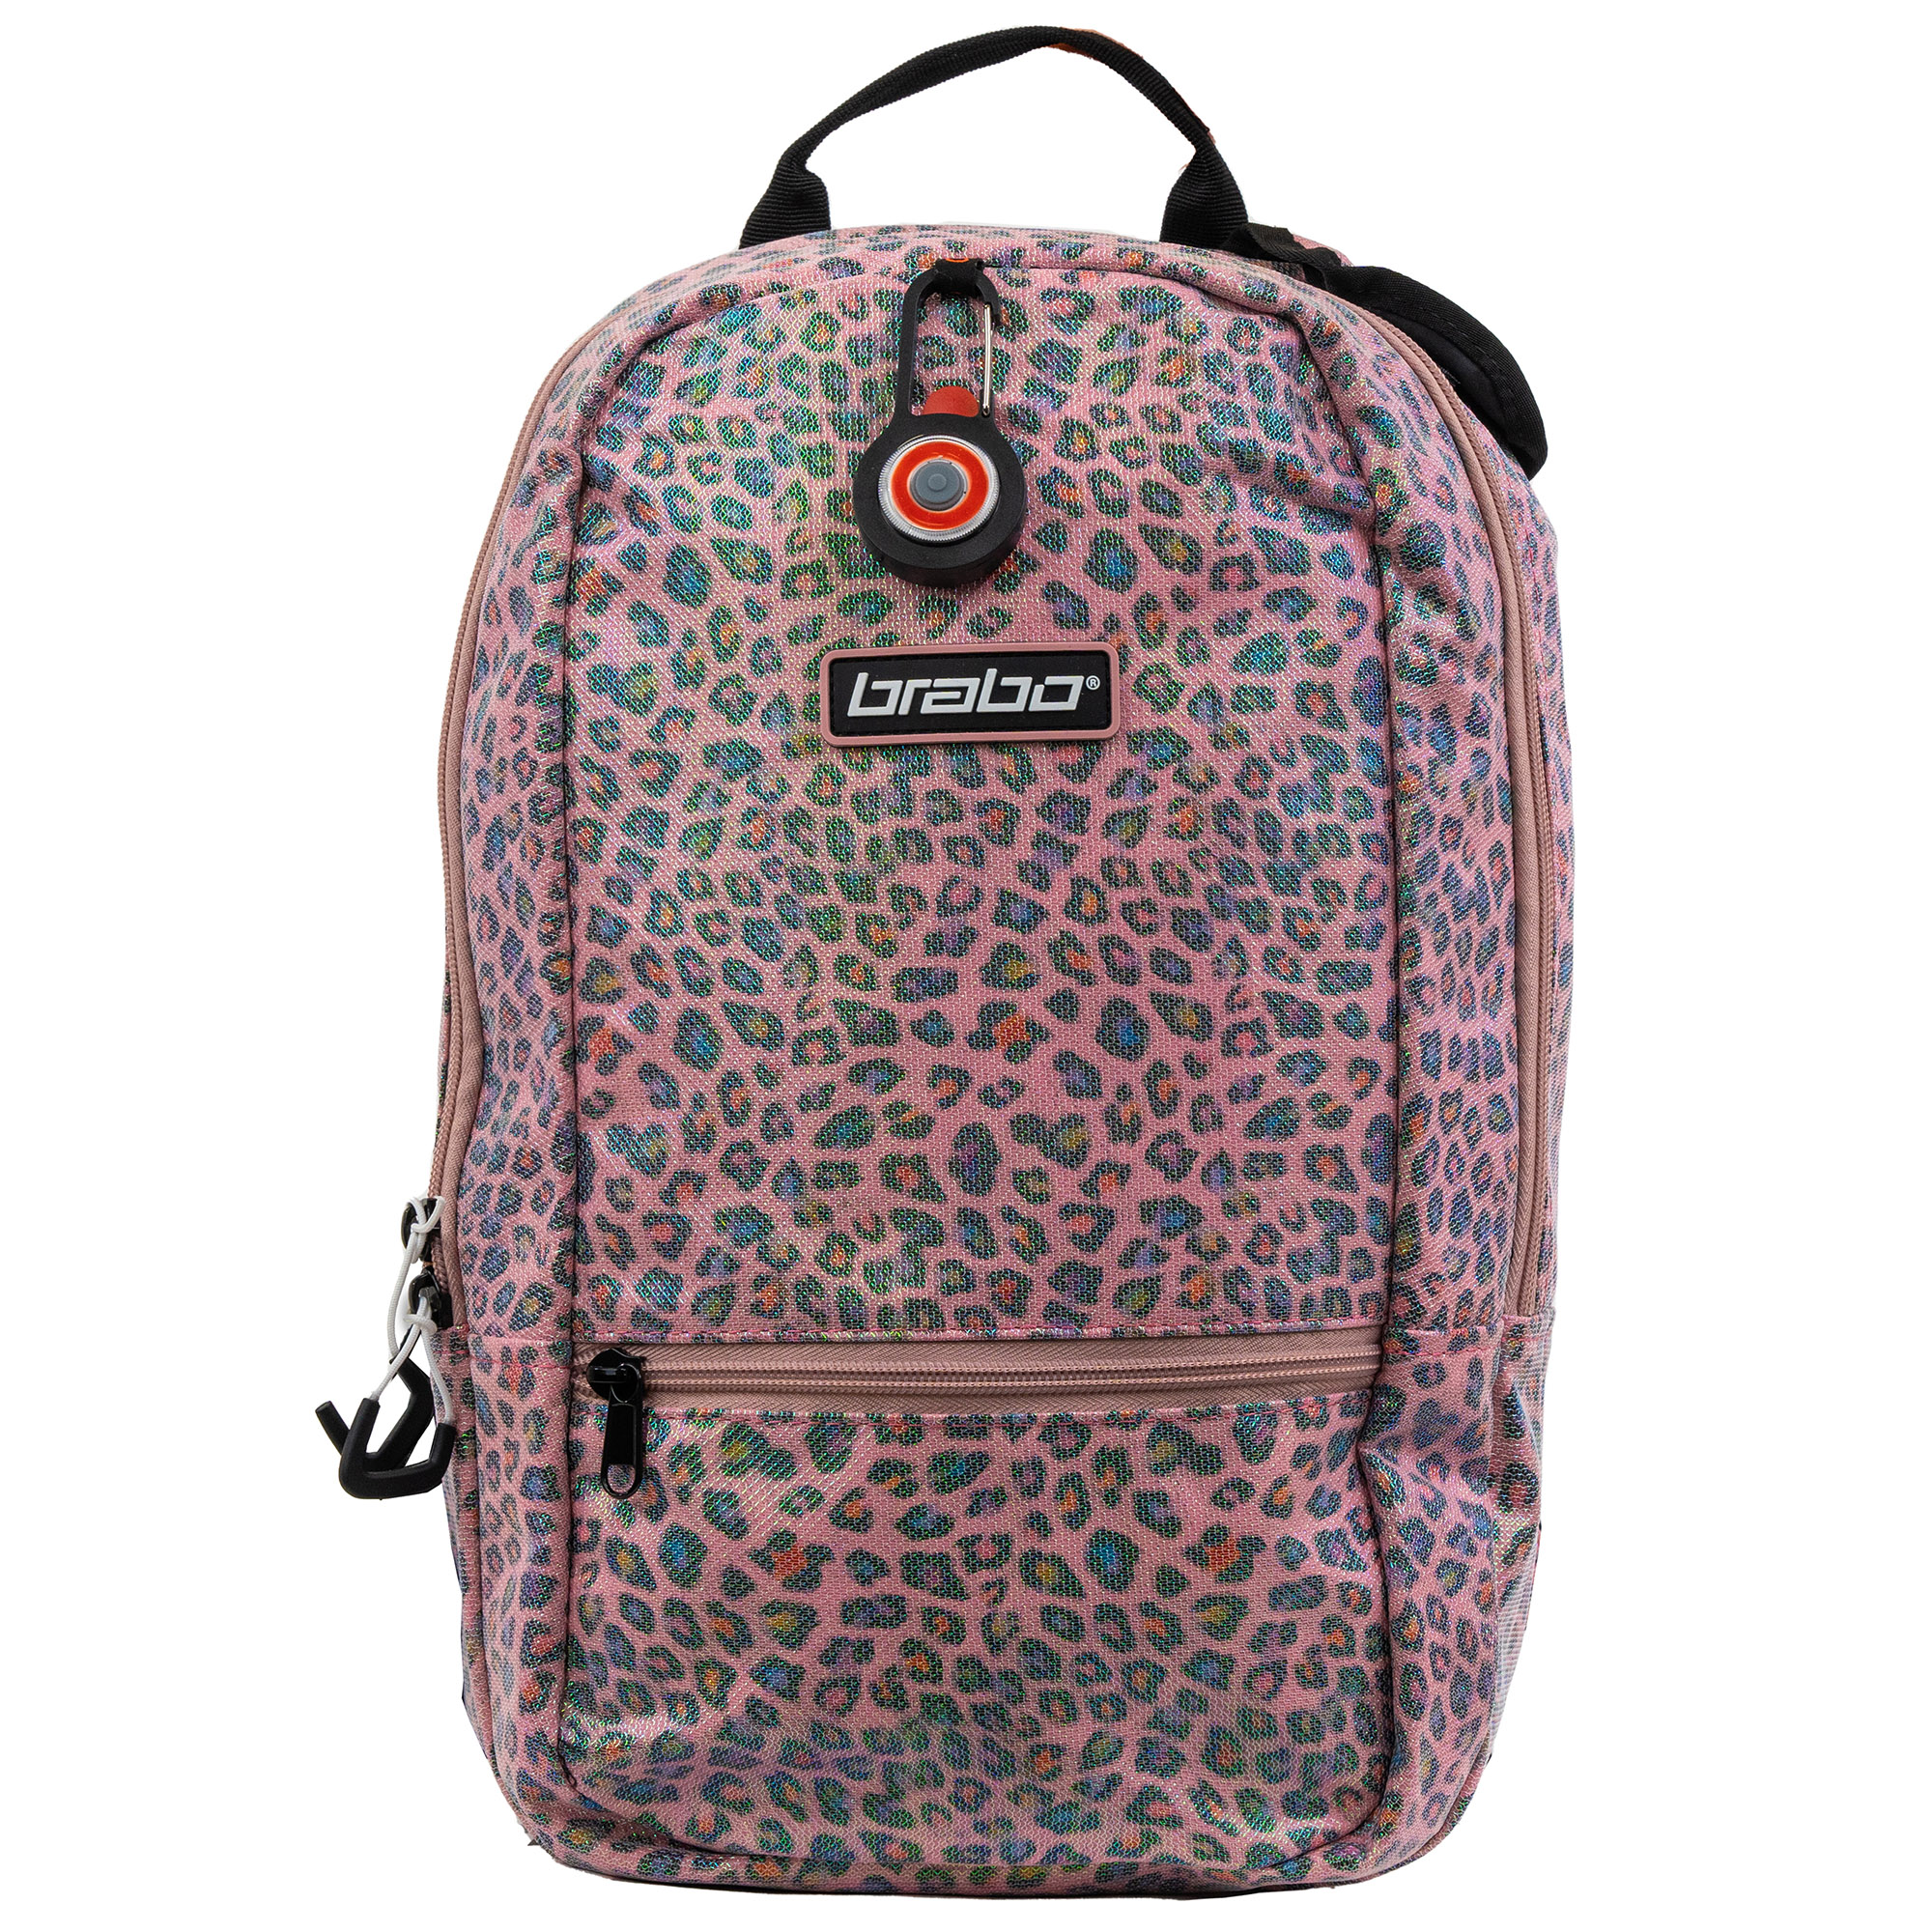 Backpack Fun Leopard